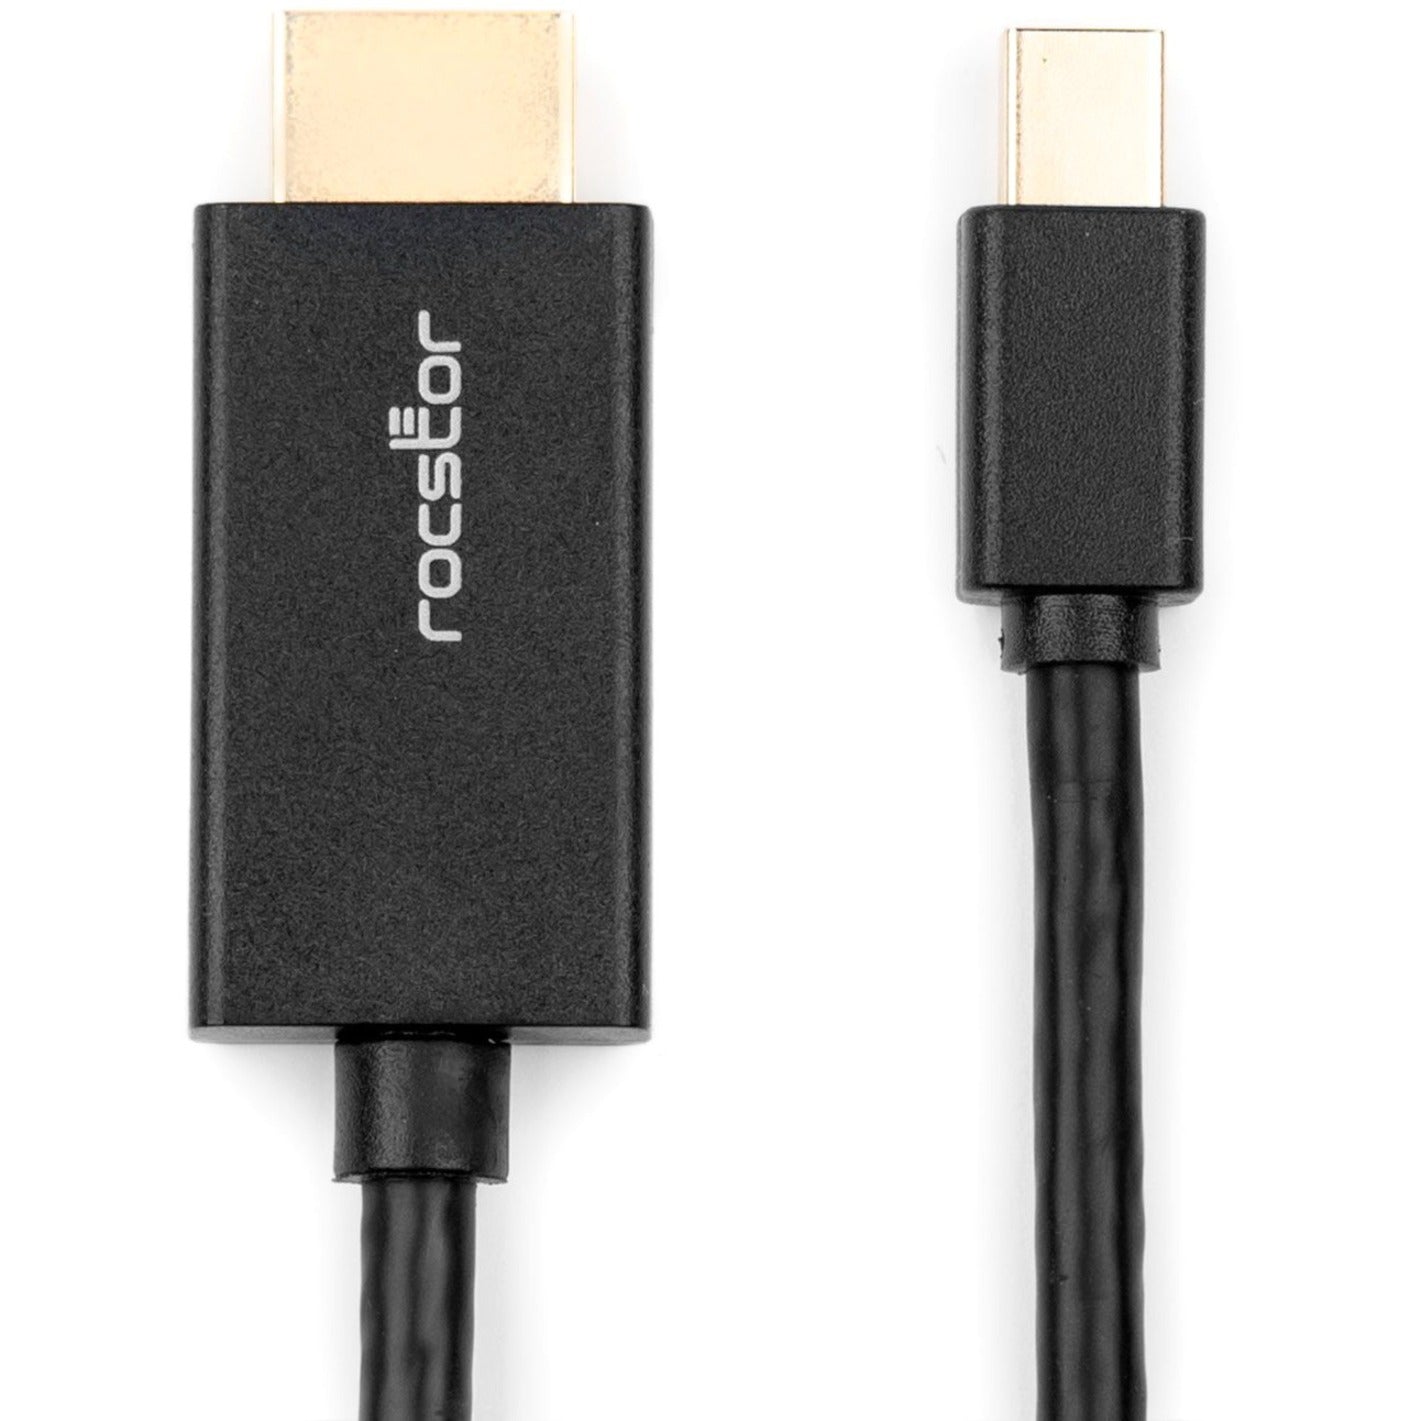 Rocstor Y10C197-B1 HDMI/Mini DisplayPort Audio/Video Cable, 10ft, 4Kx2K 30Hz, Black